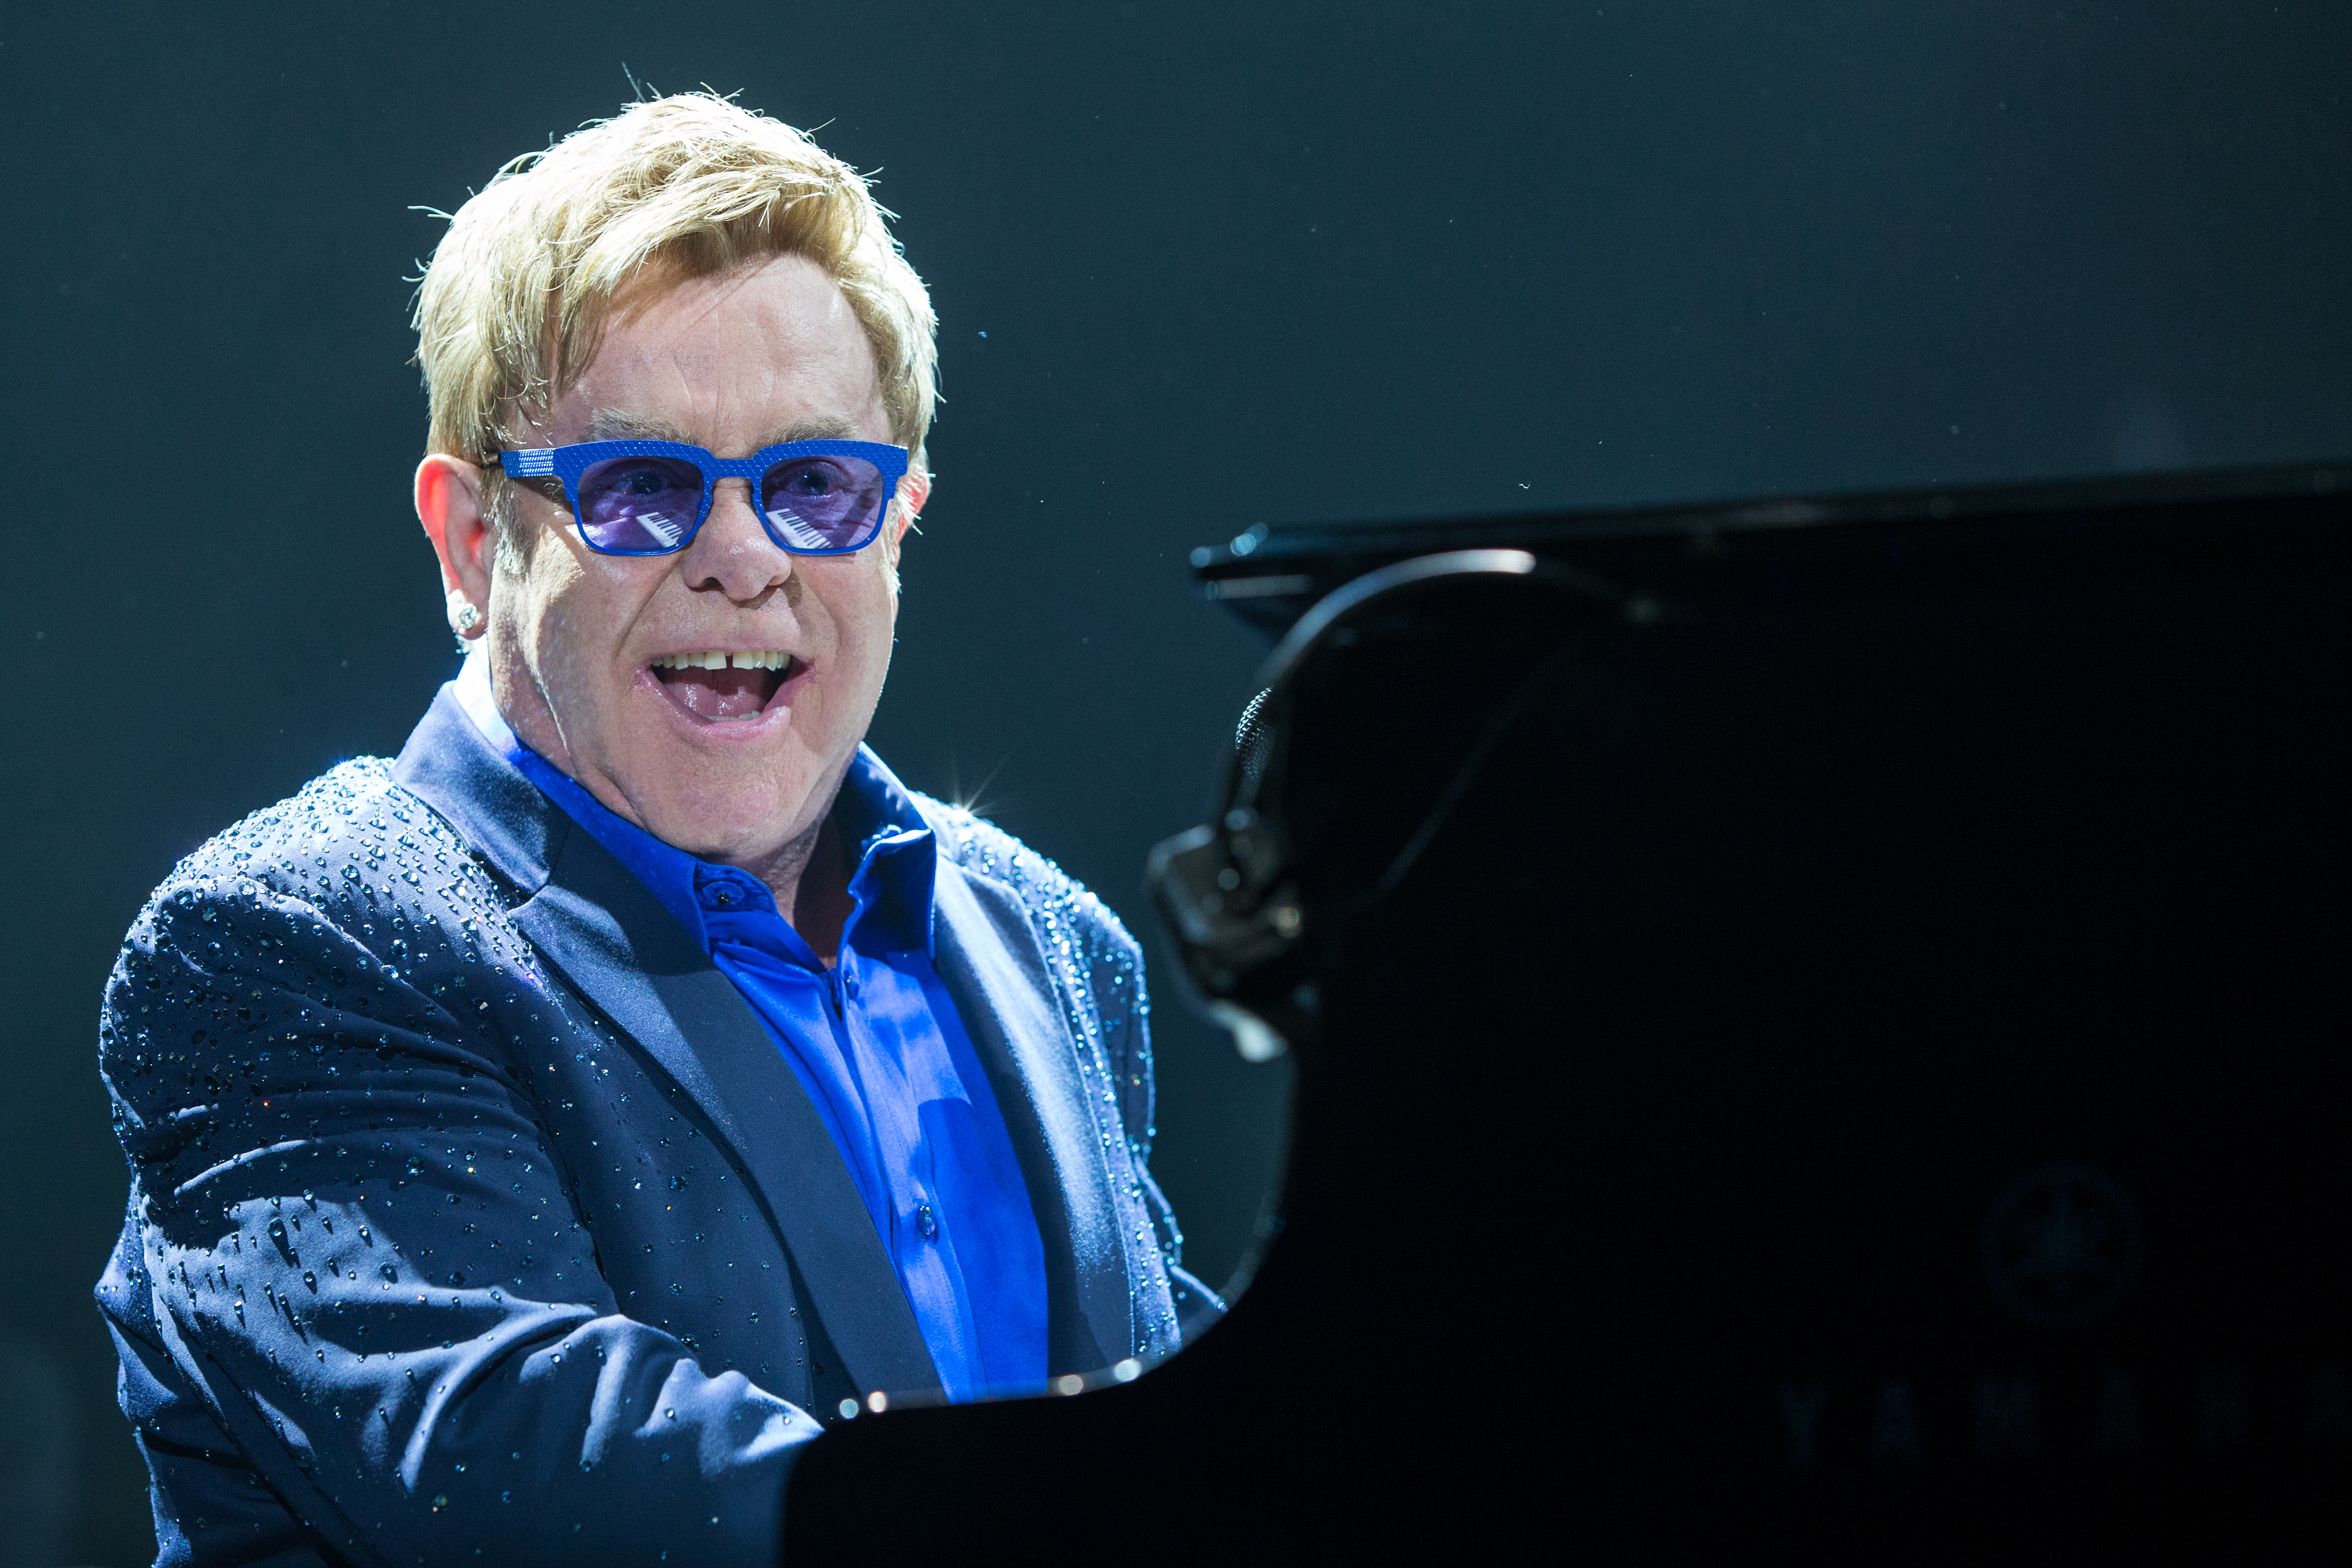 Elton John plays piano for London commuters - CBS News